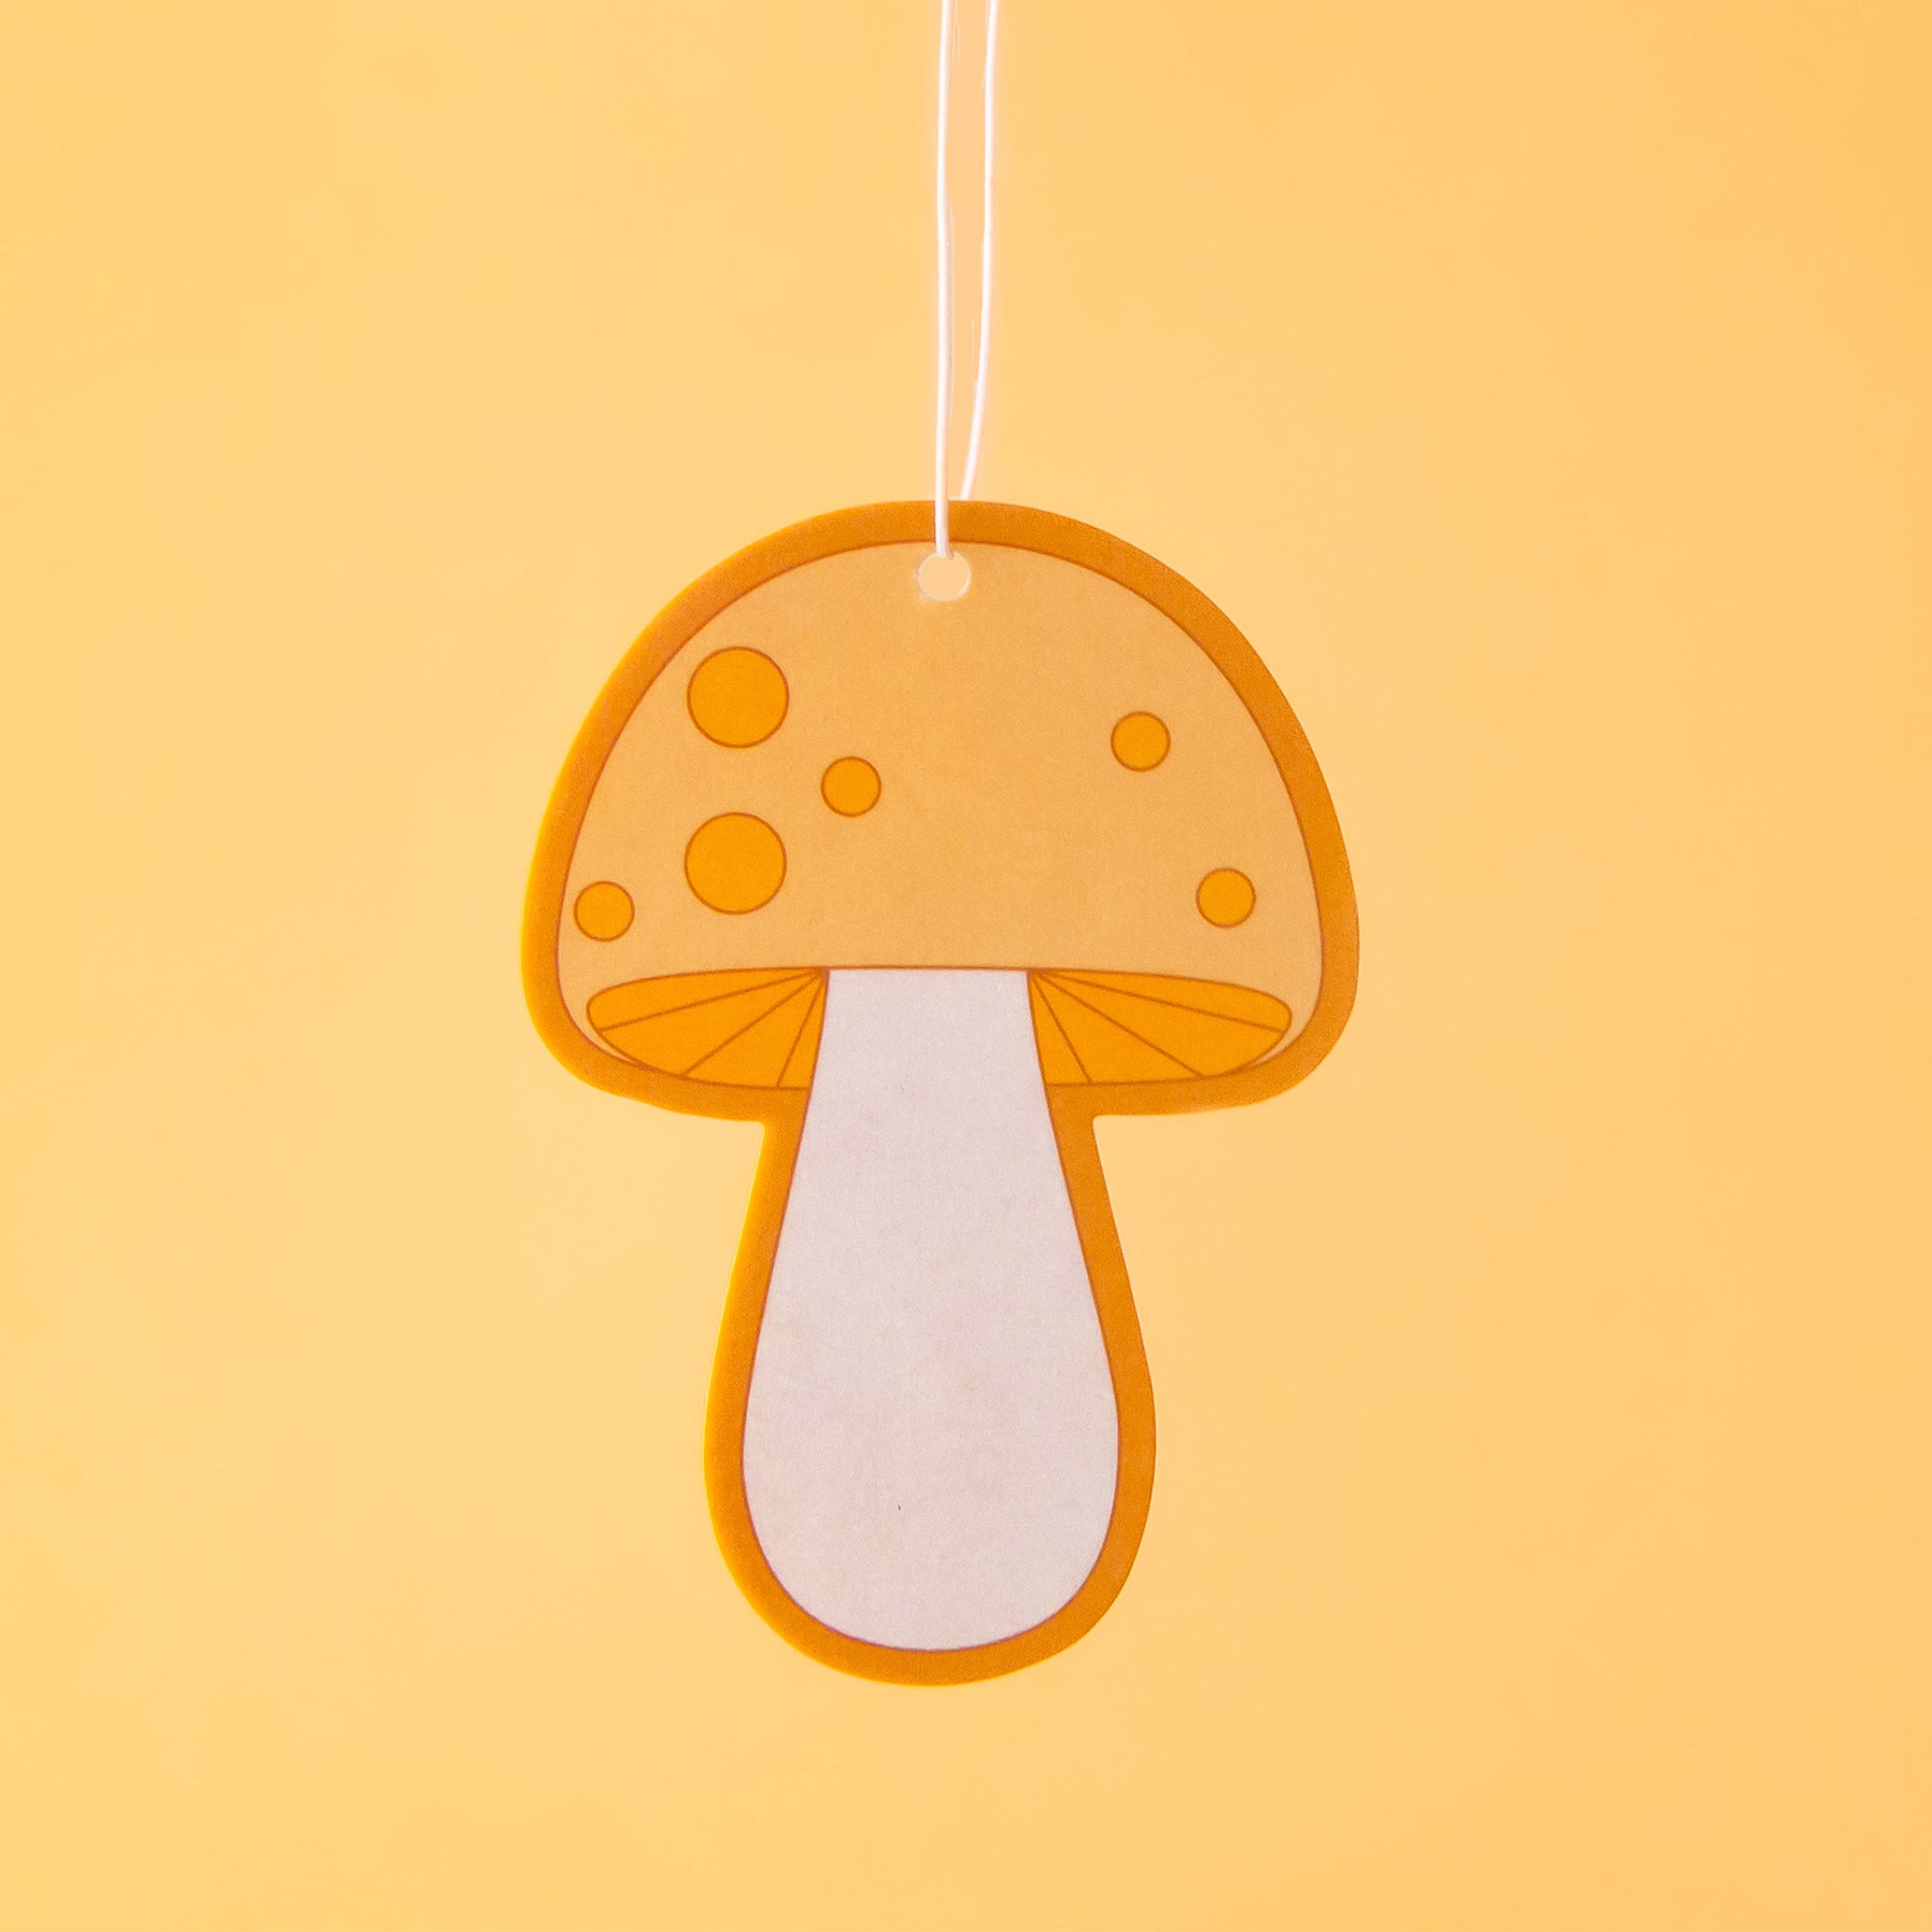 A yellow and orange mushroom shaped air freshener. 